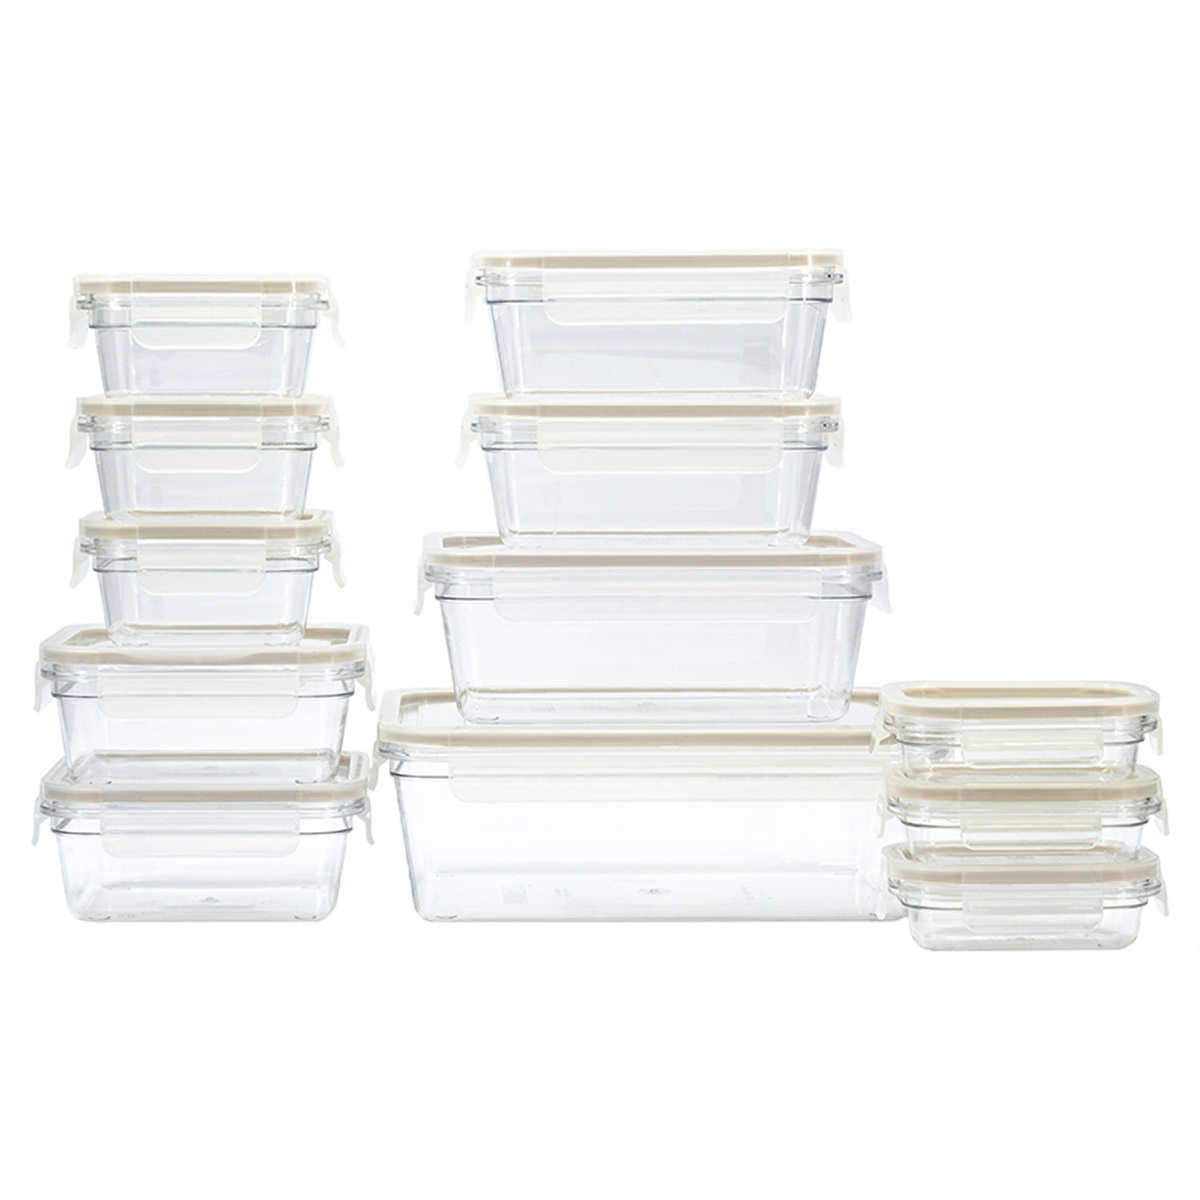 24PC Clearlock Plastic Food Storage Set